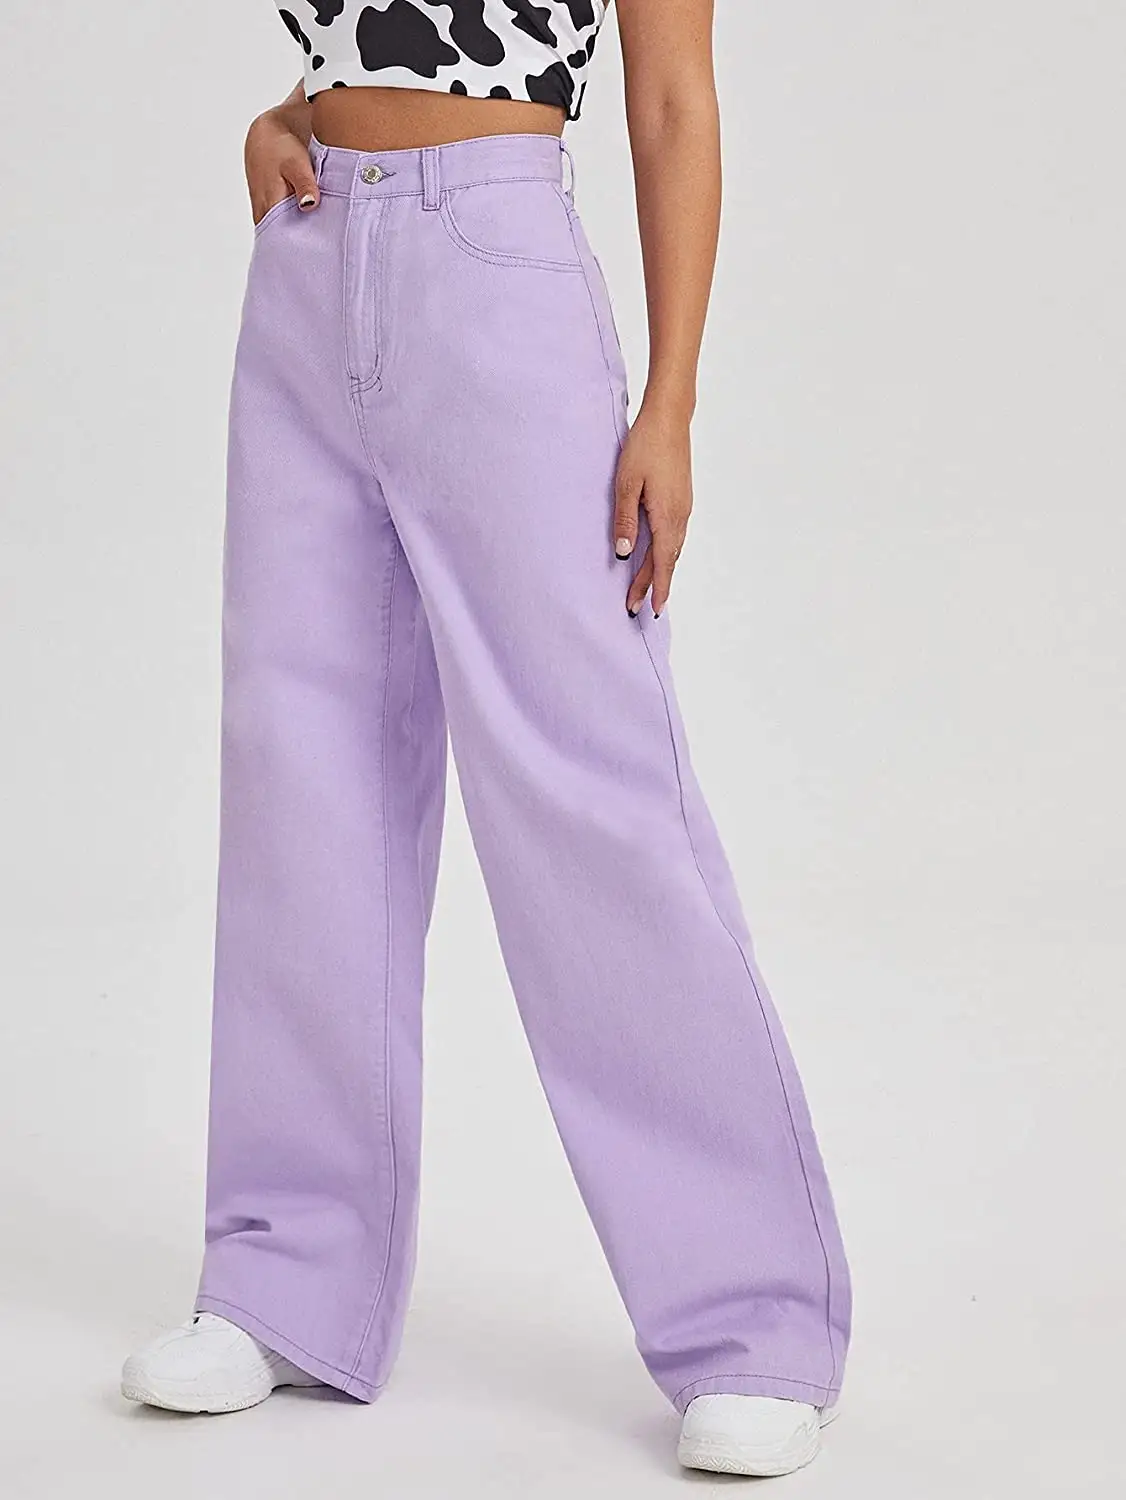 Purple Women's Pants High Waist Loose Straight Denim Jeans Plus Size Women's Clothing High Fashion Jeans